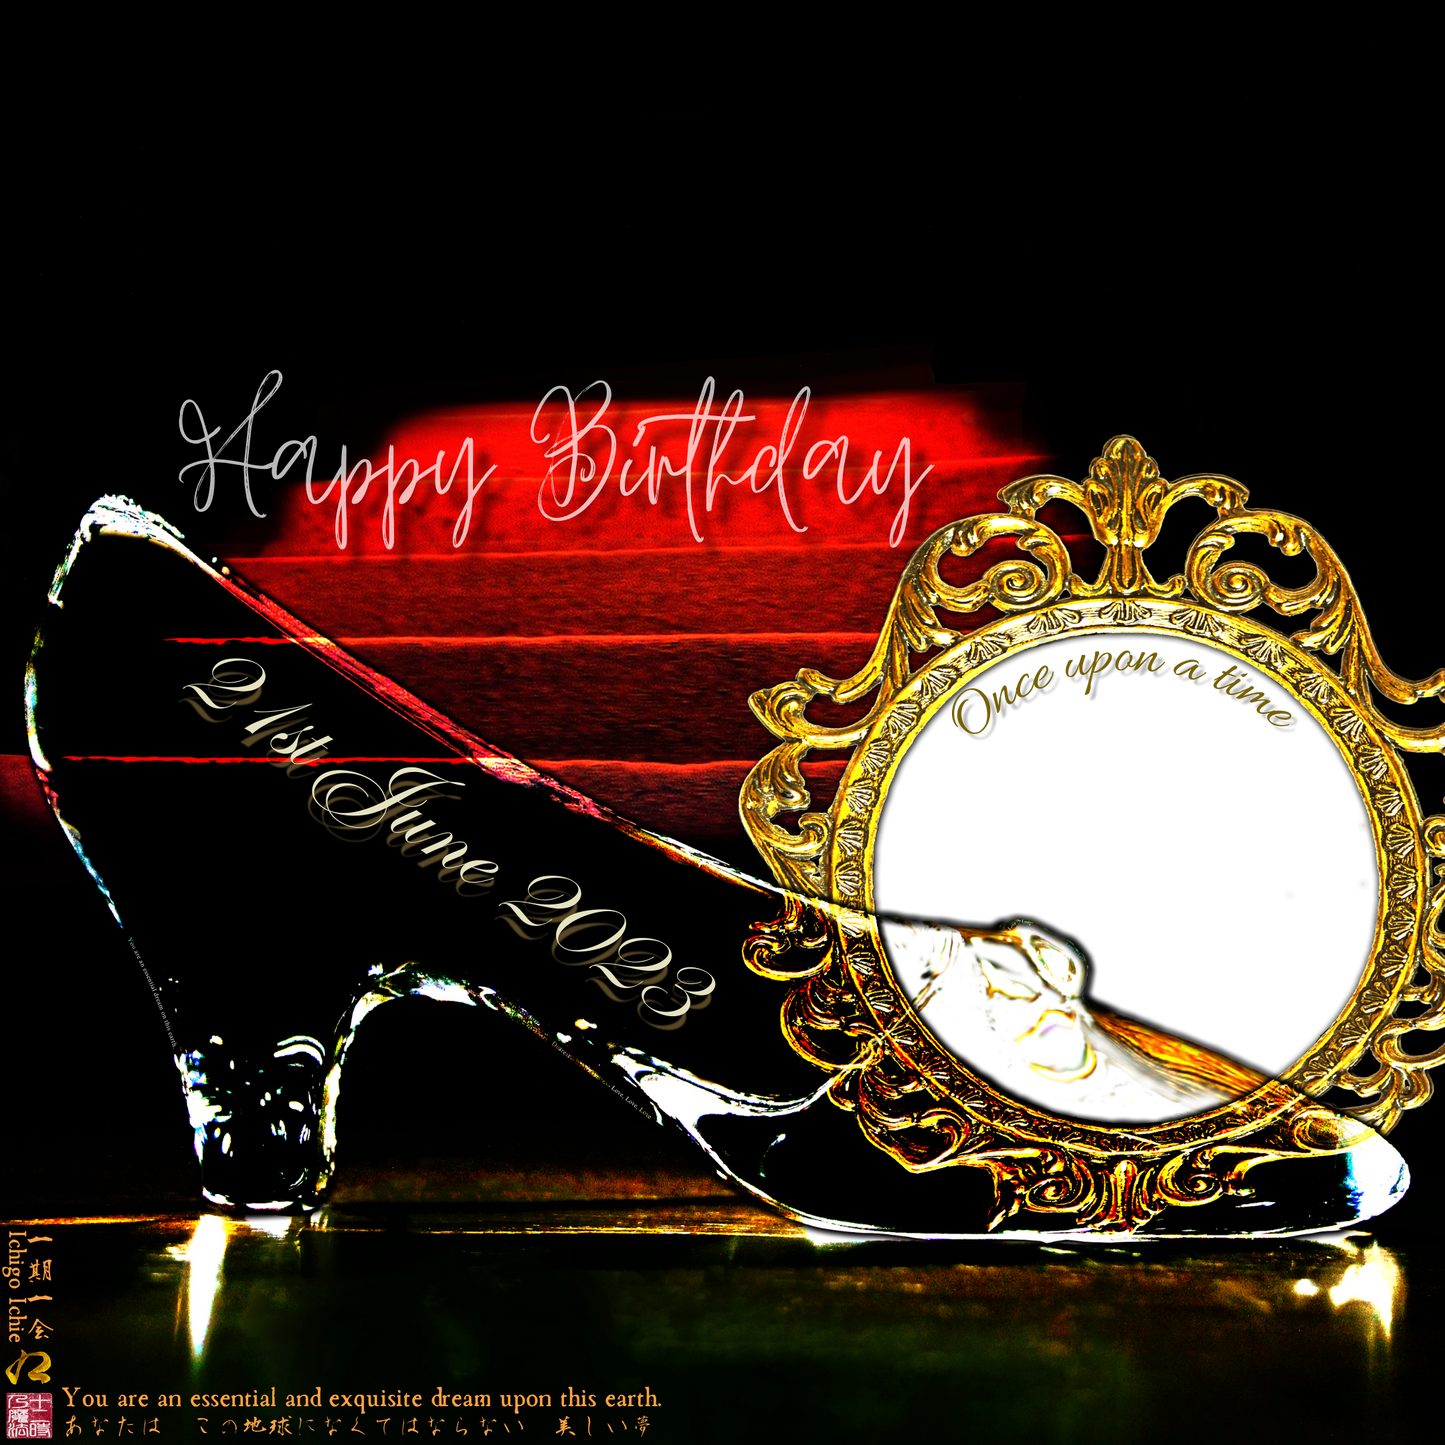 Happy Birthday Glass Slipper "Ichigo Ichie" 21st June 2023 the Right (1-of-1) NFT Art